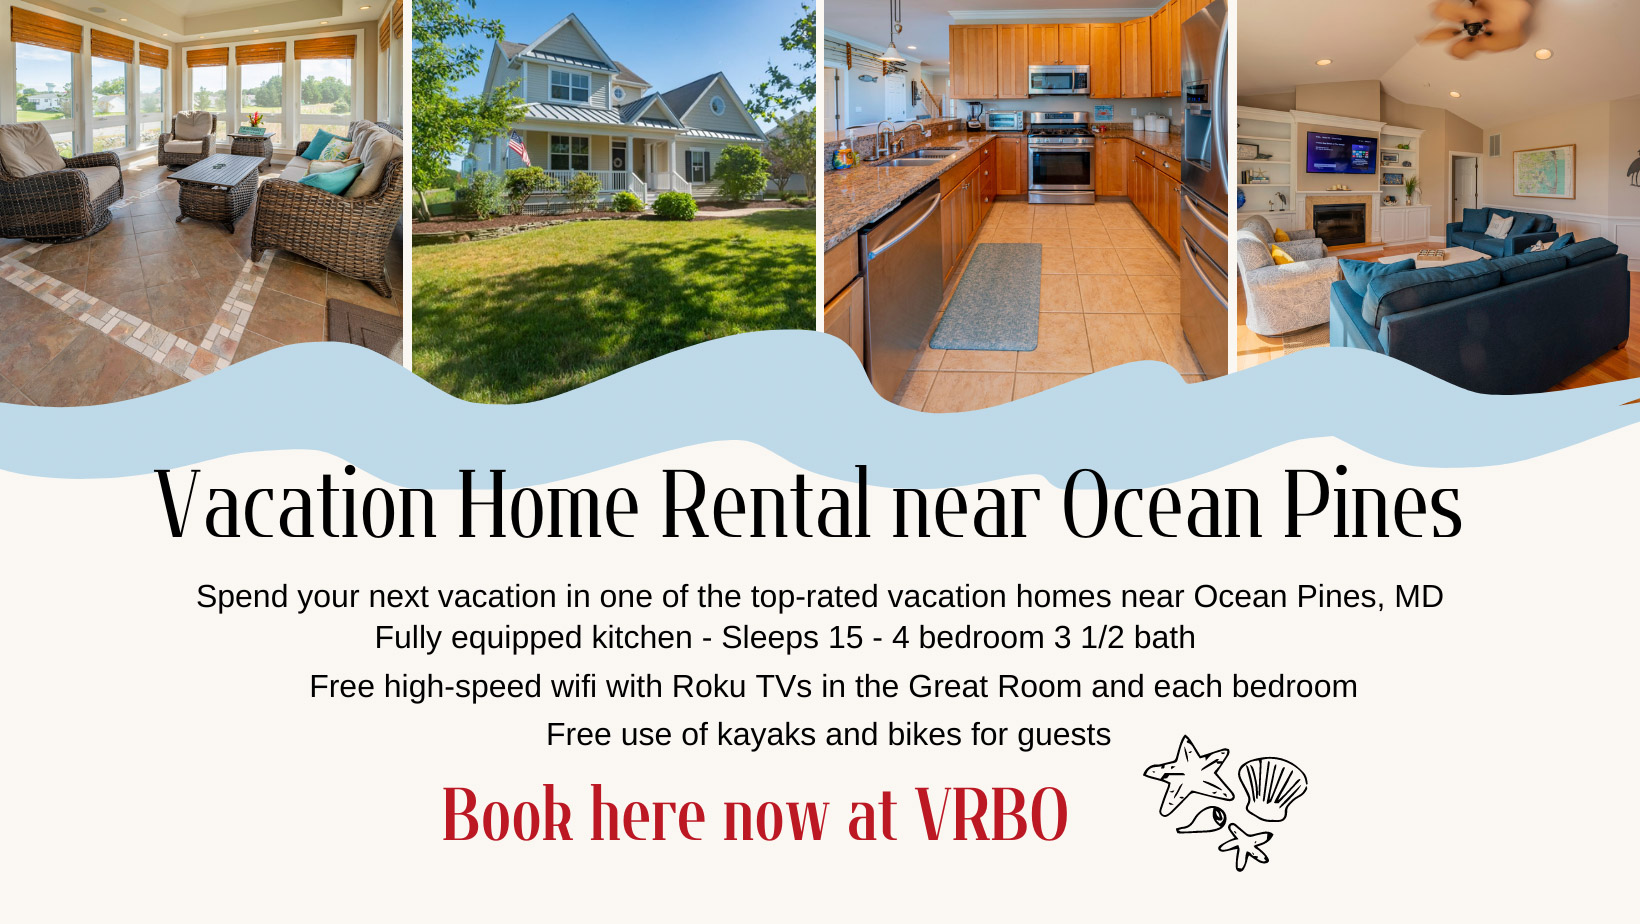 Vacation rental near Ocean Pines MD